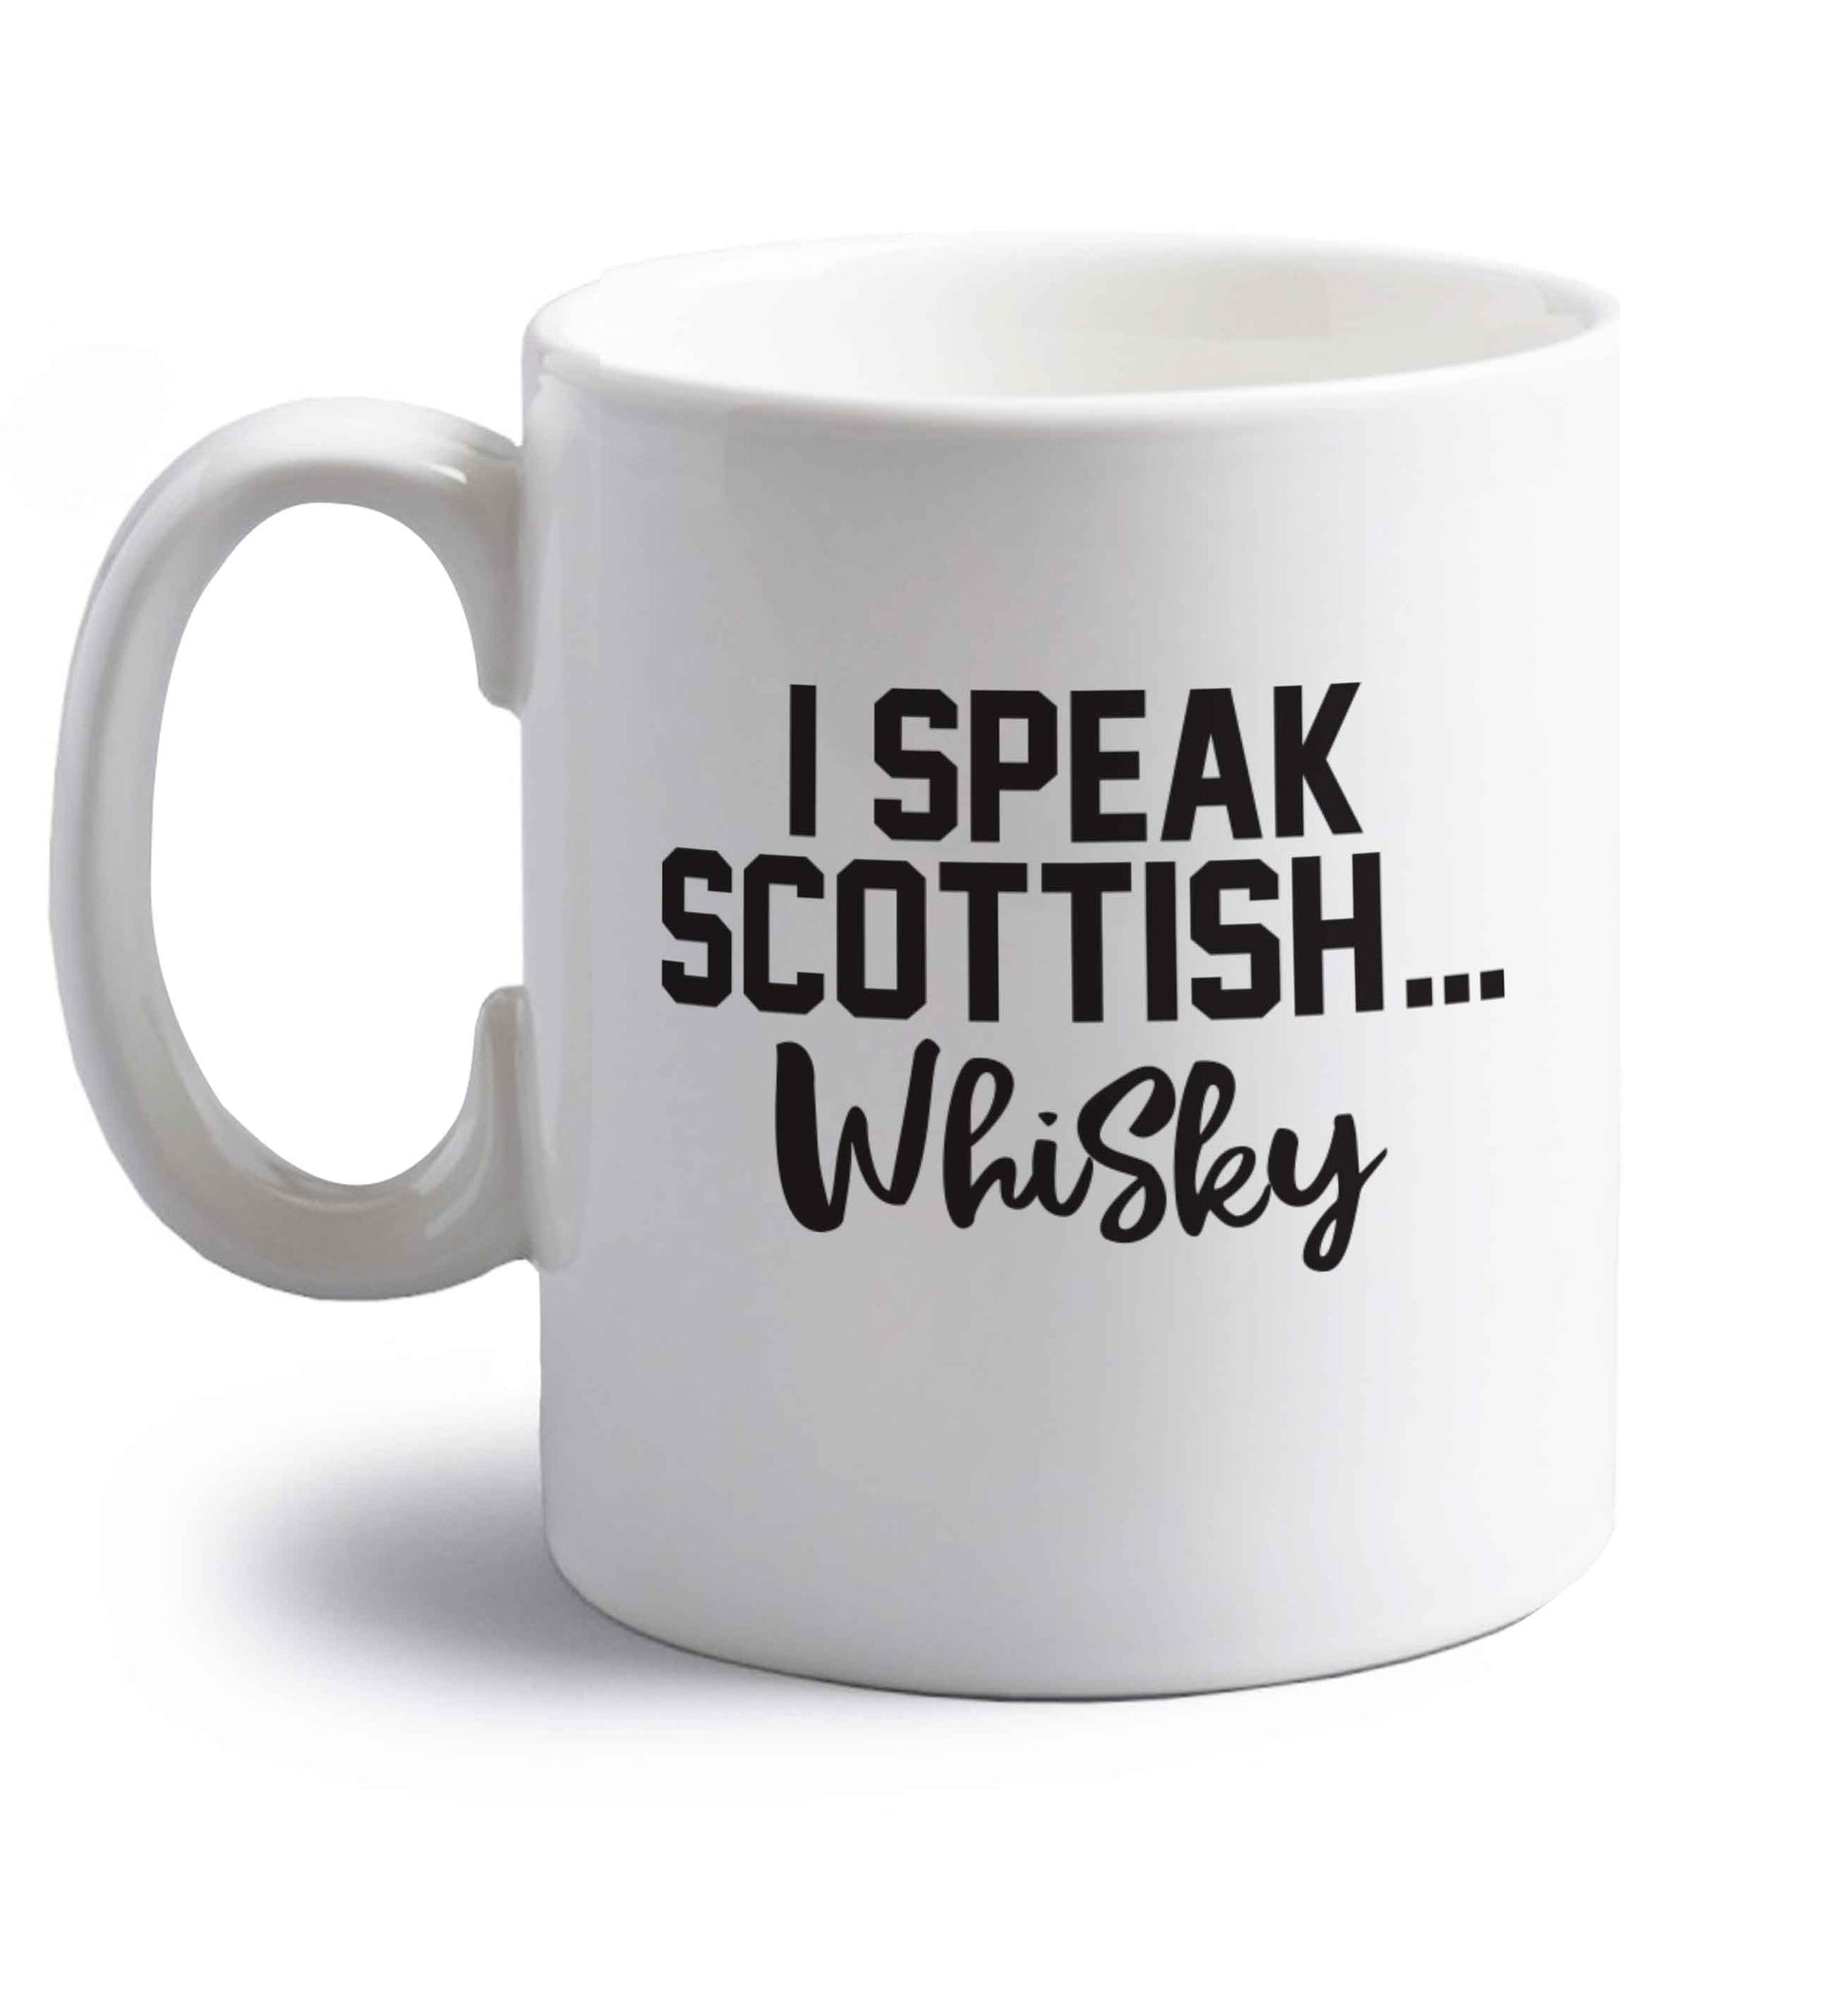 I speak scottish...whisky right handed white ceramic mug 